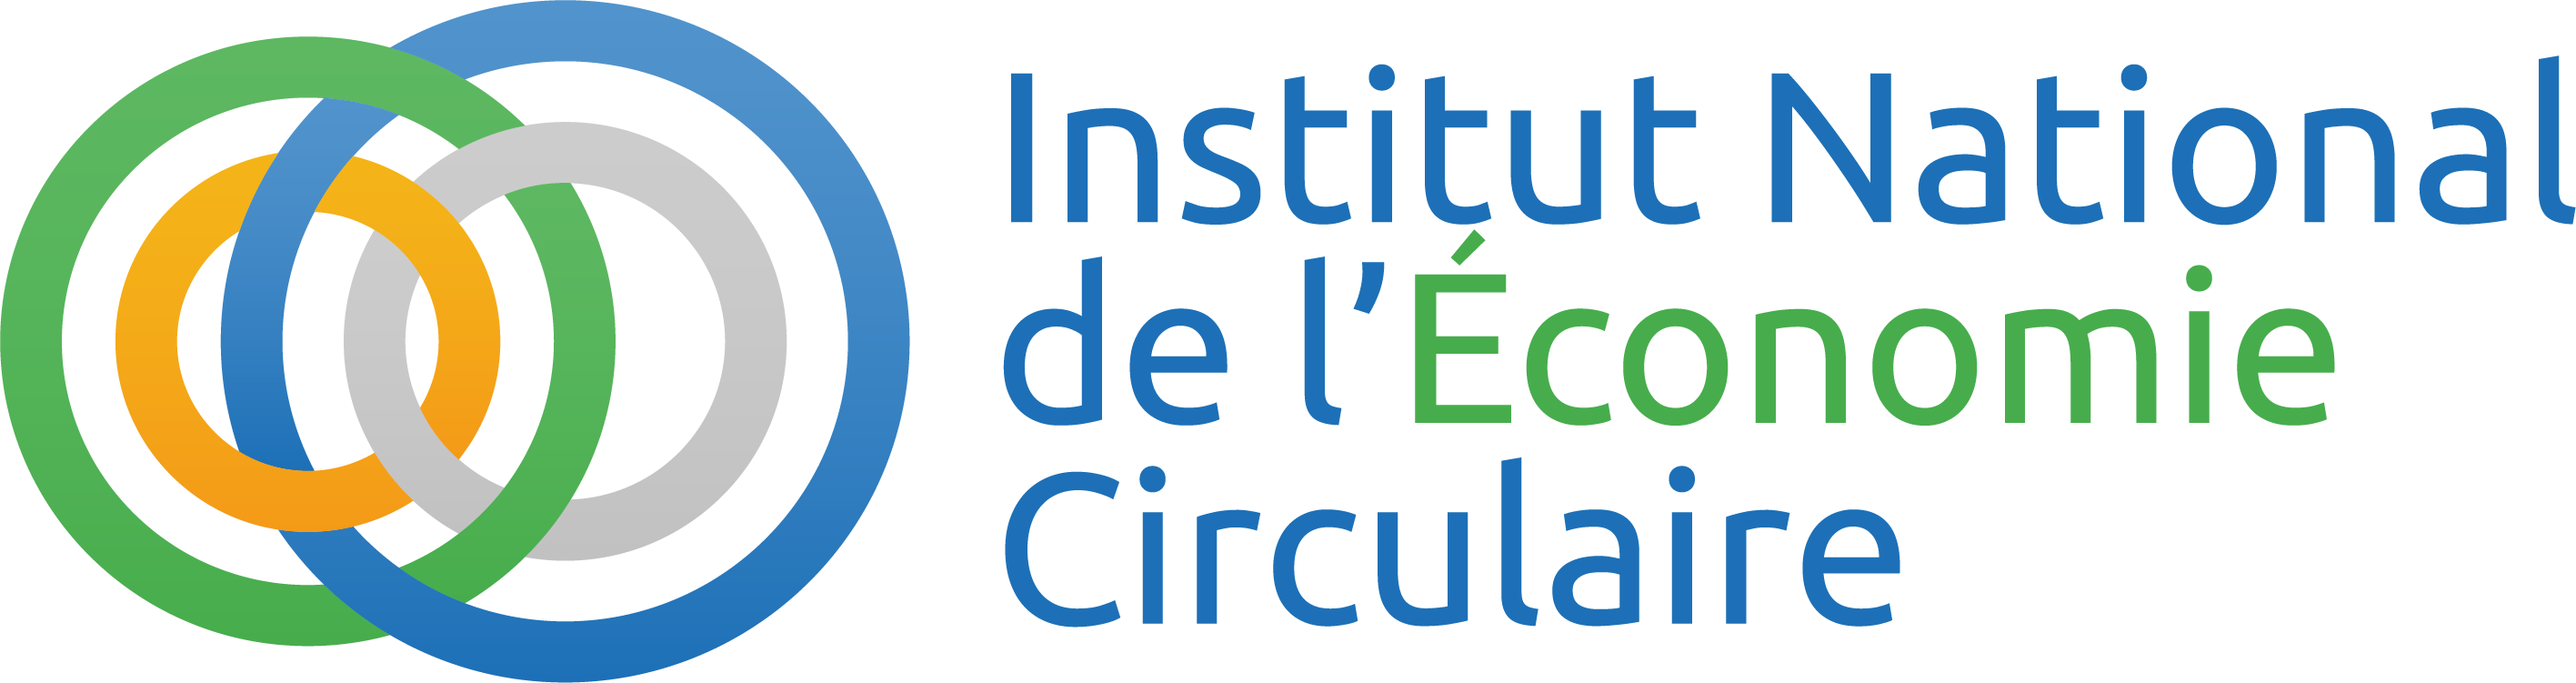 Logo INEC